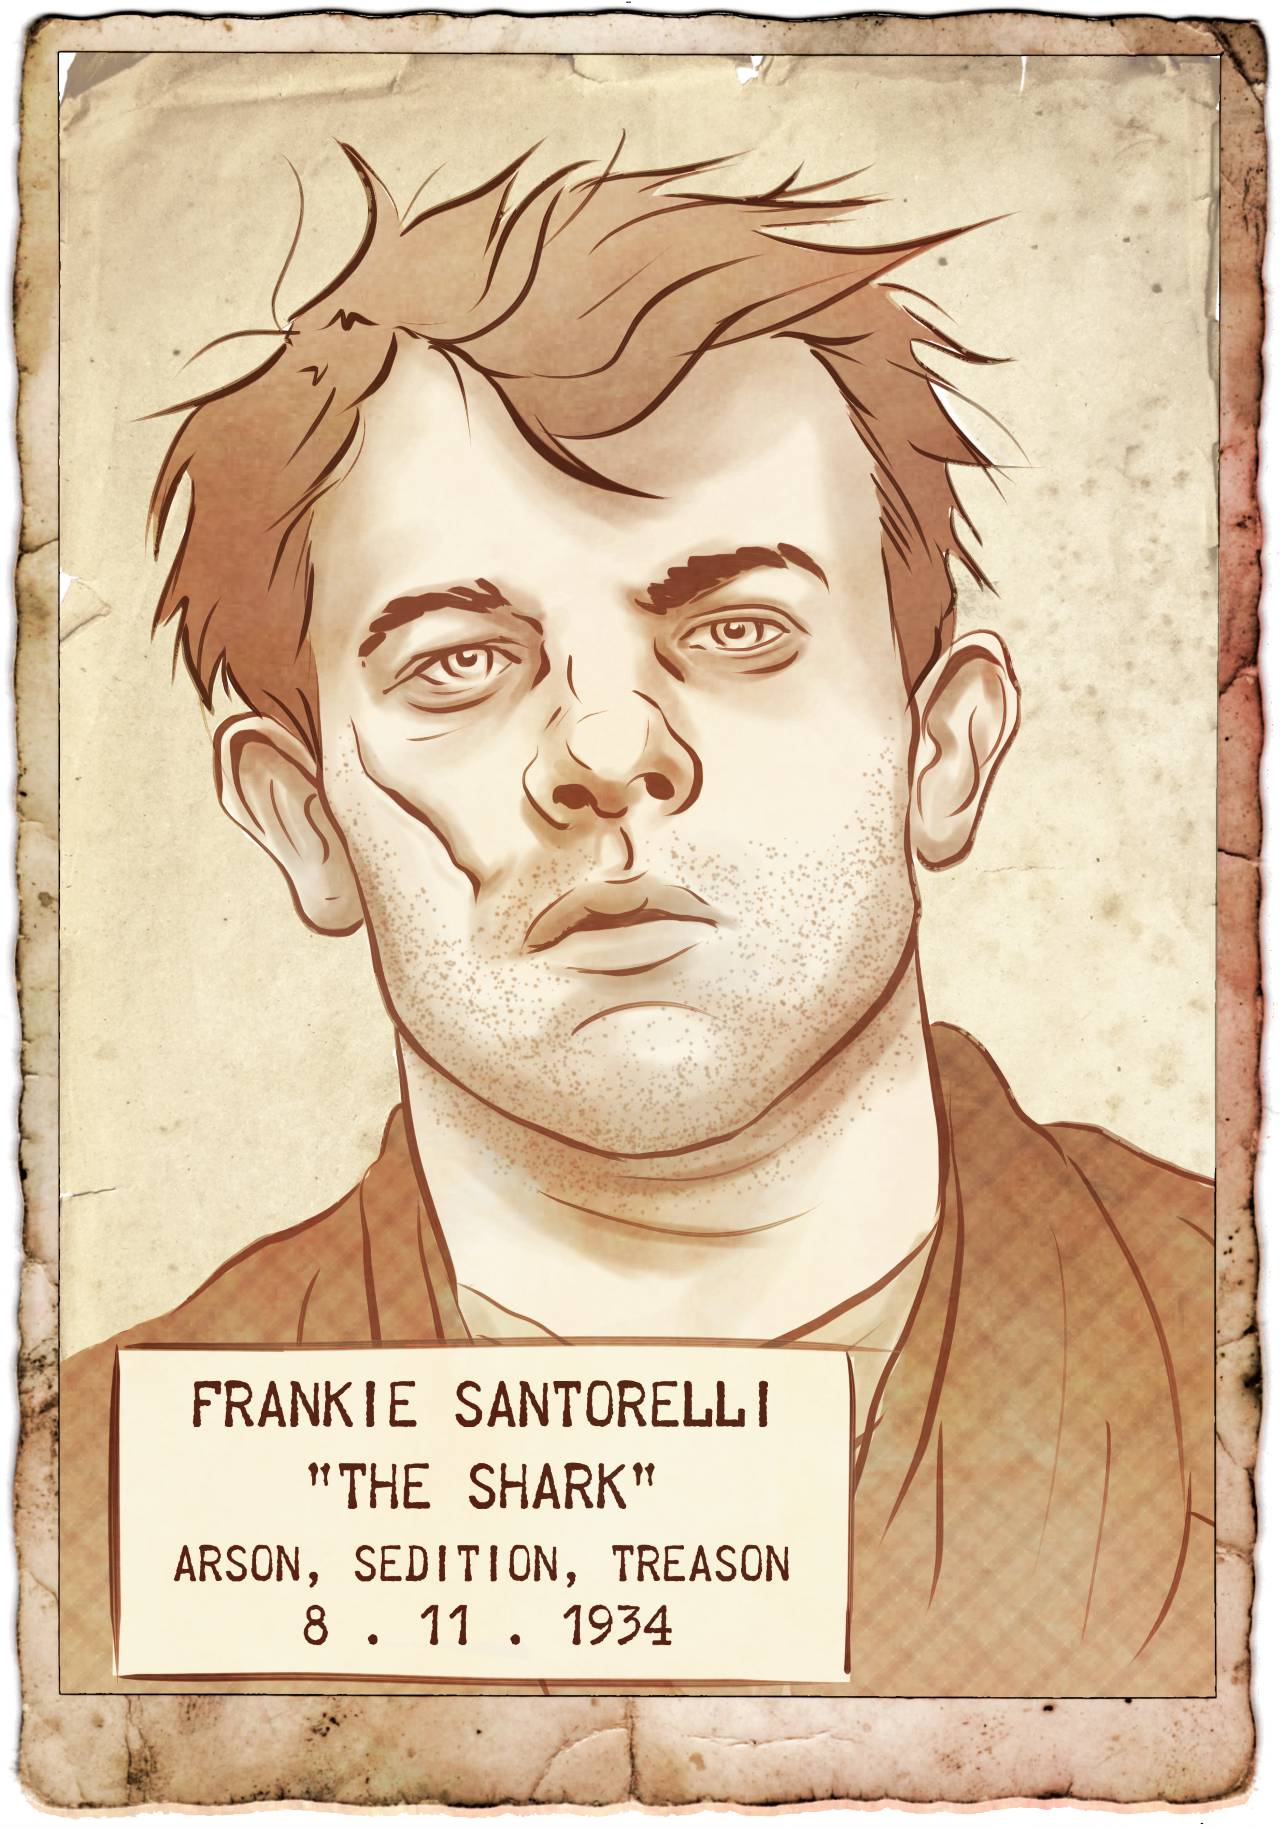 Frankie Santorelli